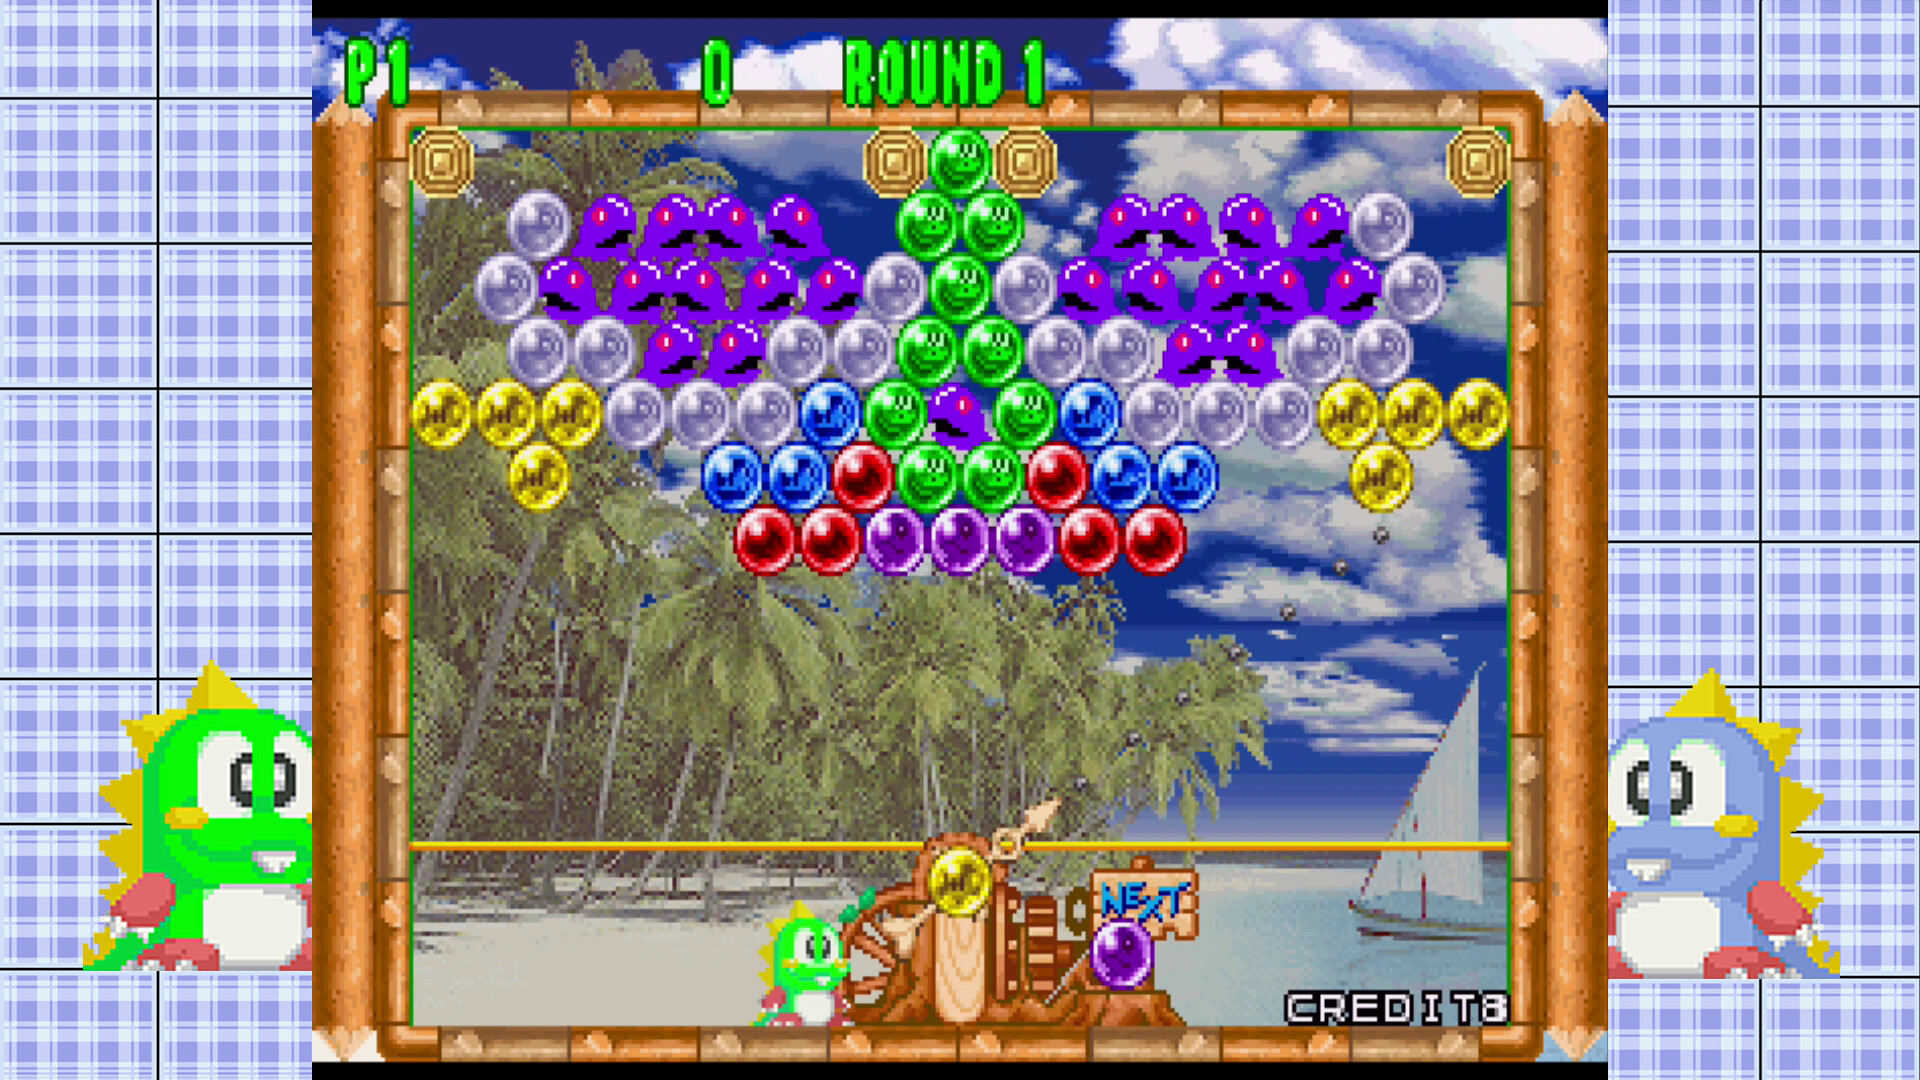 Puzzle Bobble GB  Bust-A-Move 2: Arcade Edition para Game Boy (1997)